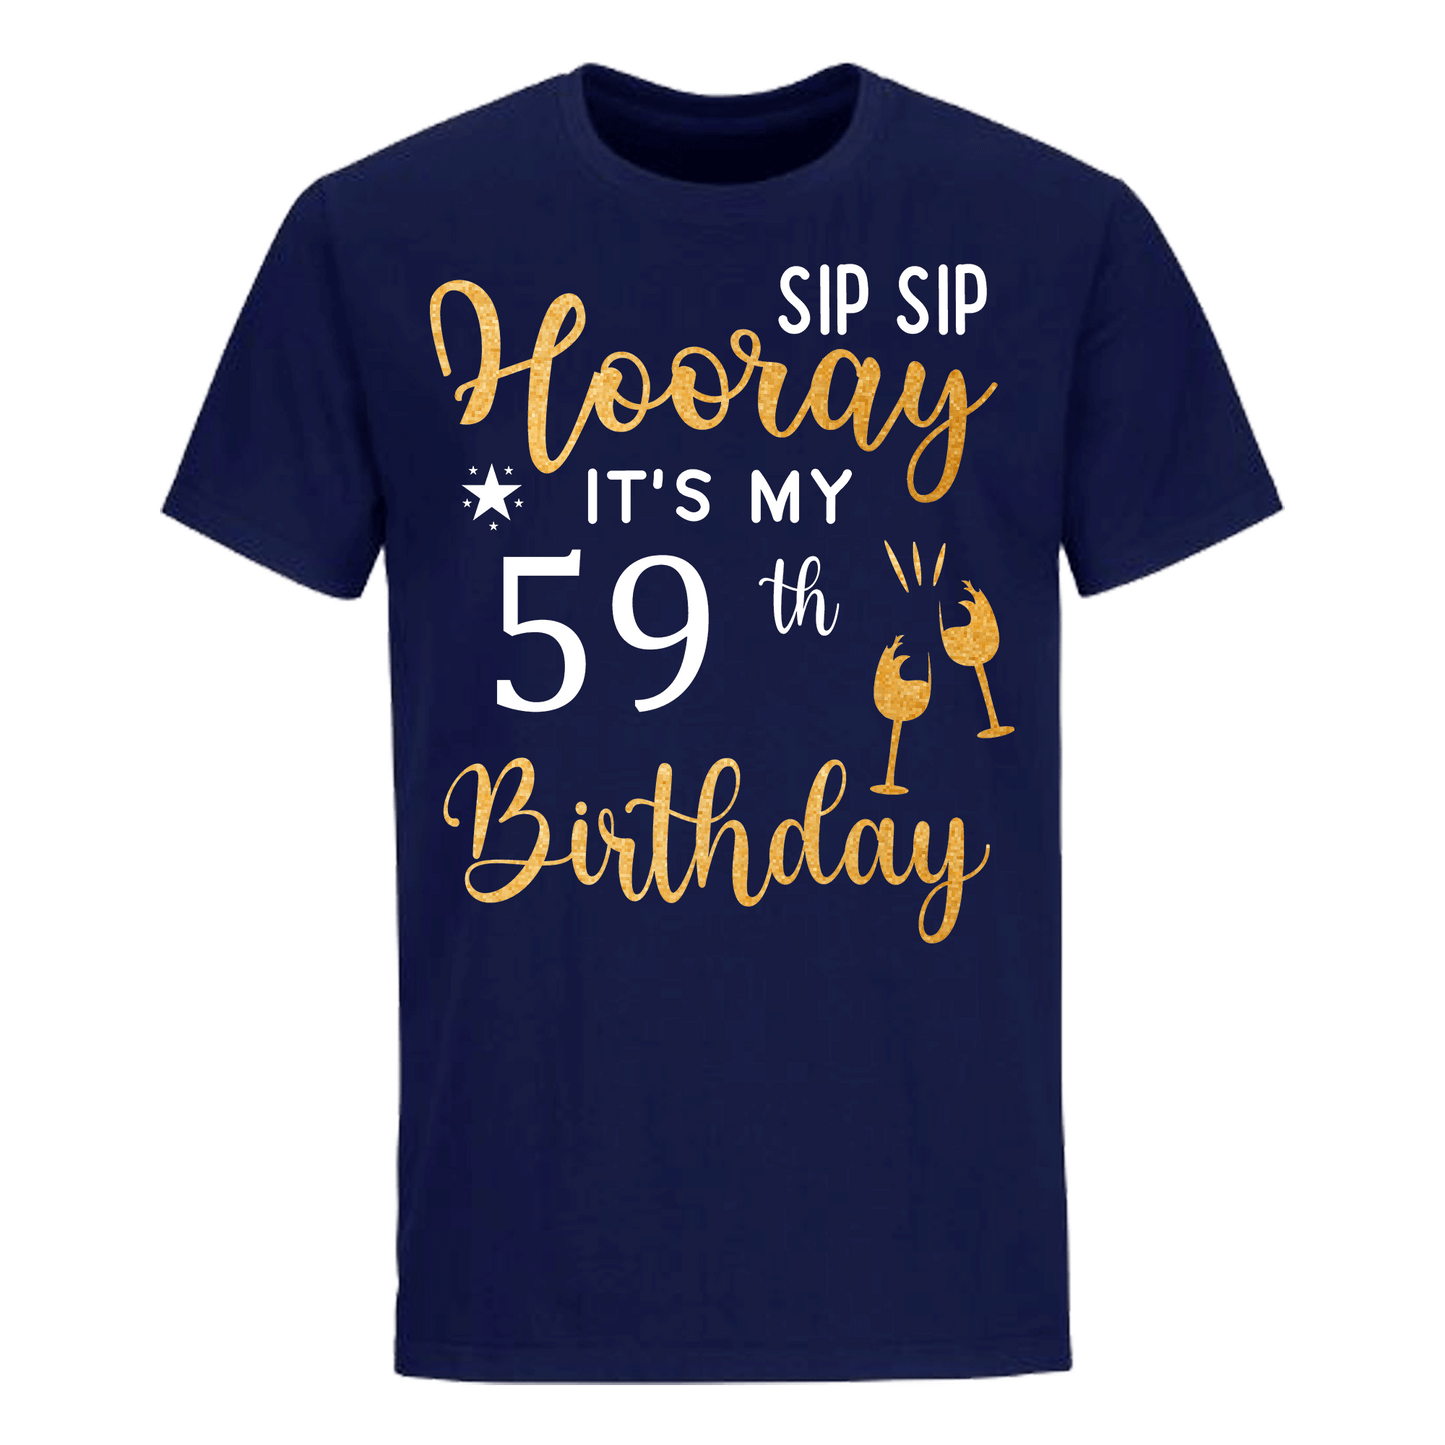 HOORAY IT'S MY 59th BIRTHDAY SHIRT